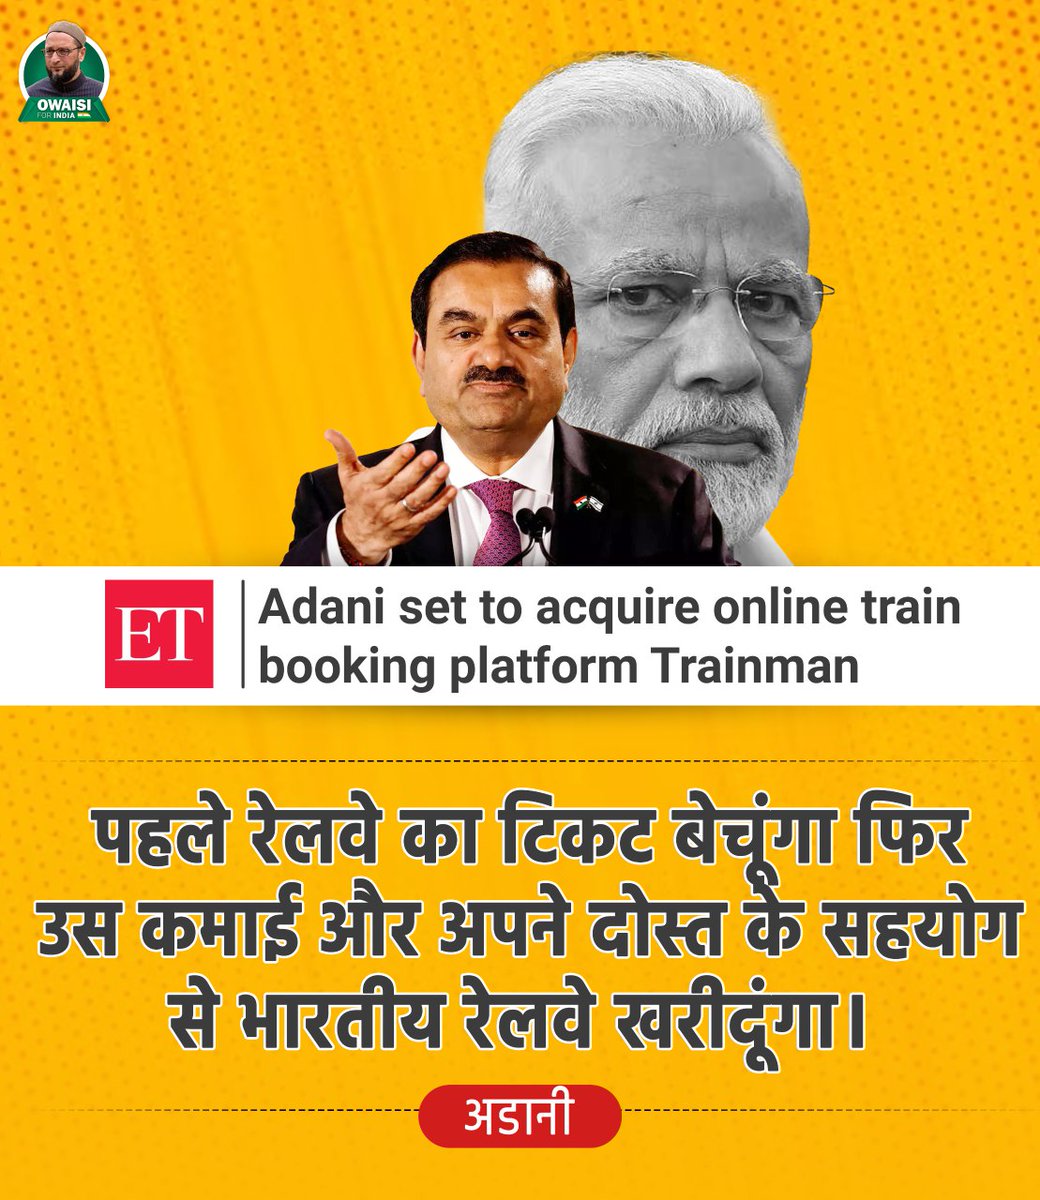 Adani set to acquire online Train booking platform Trainman 

#Adani #trainplatform #online #trainbooking #India